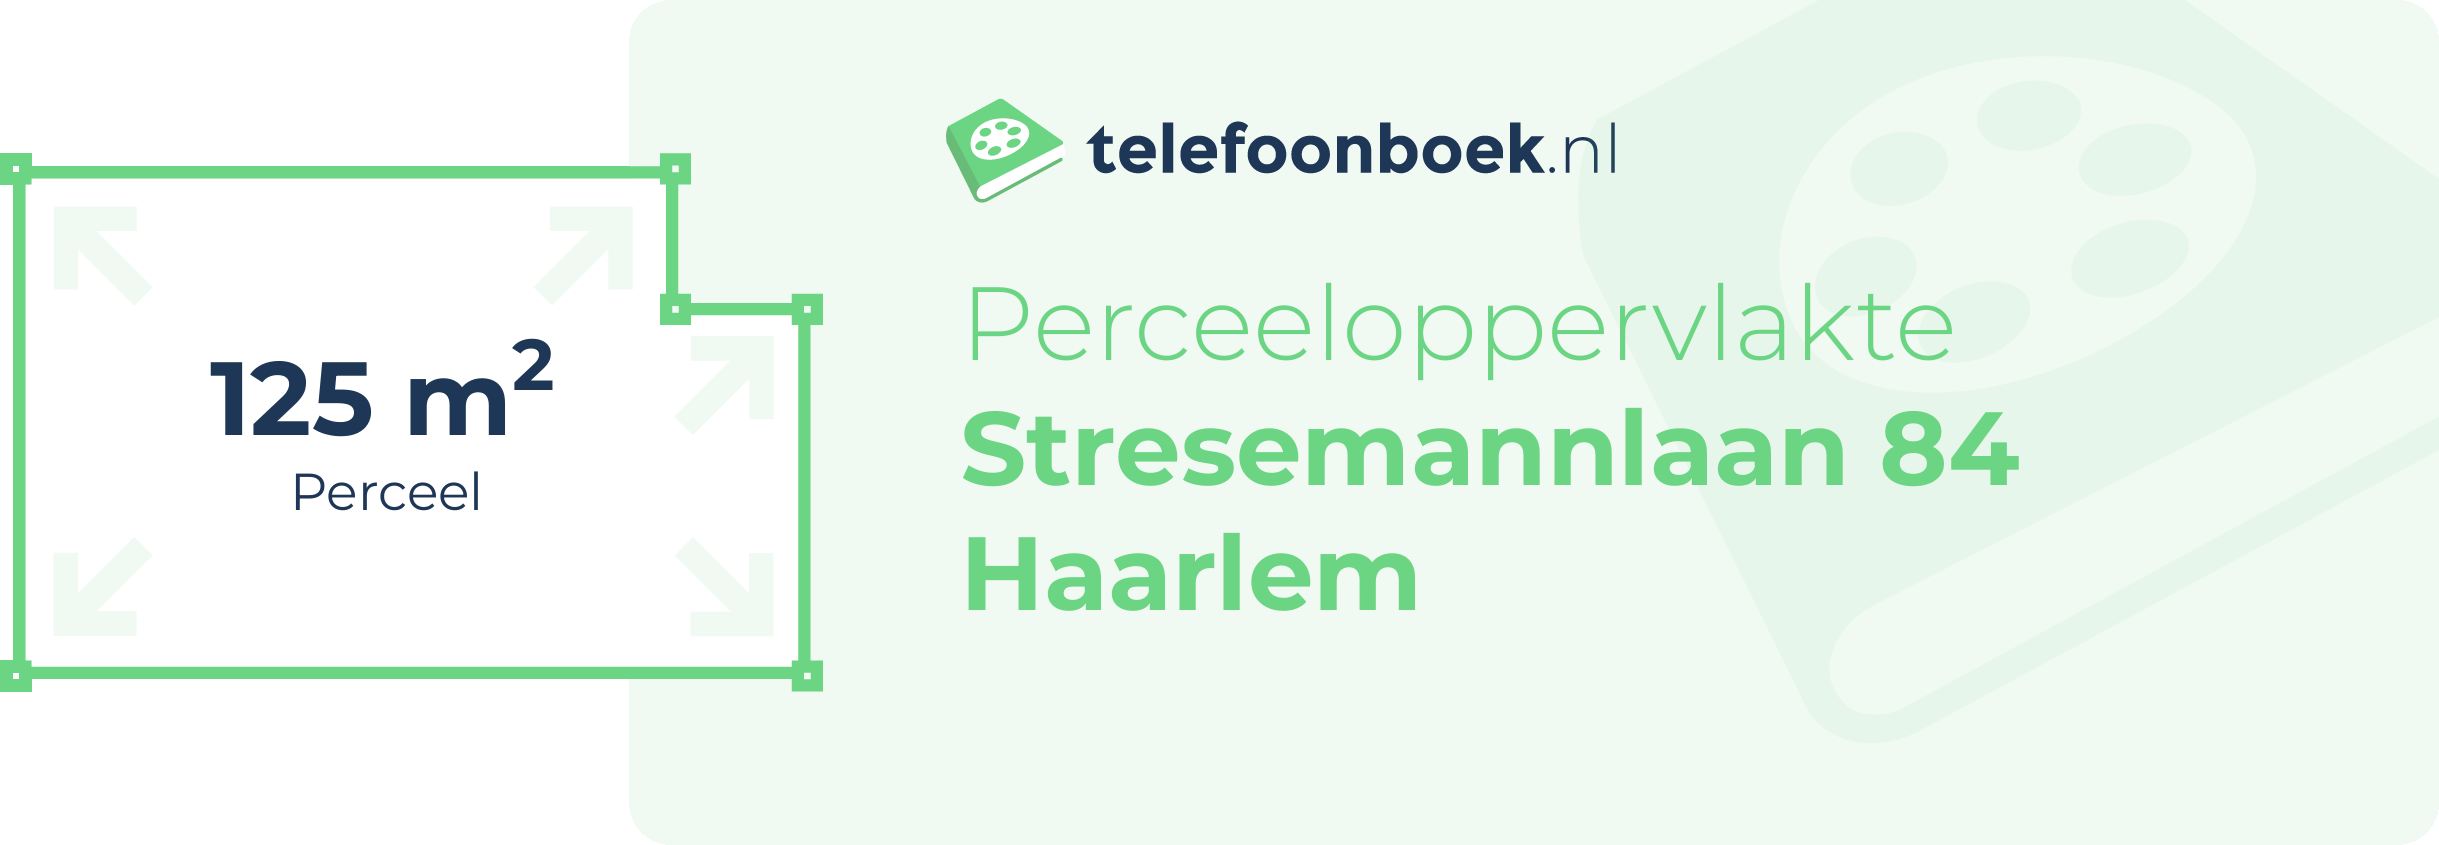 Perceeloppervlakte Stresemannlaan 84 Haarlem